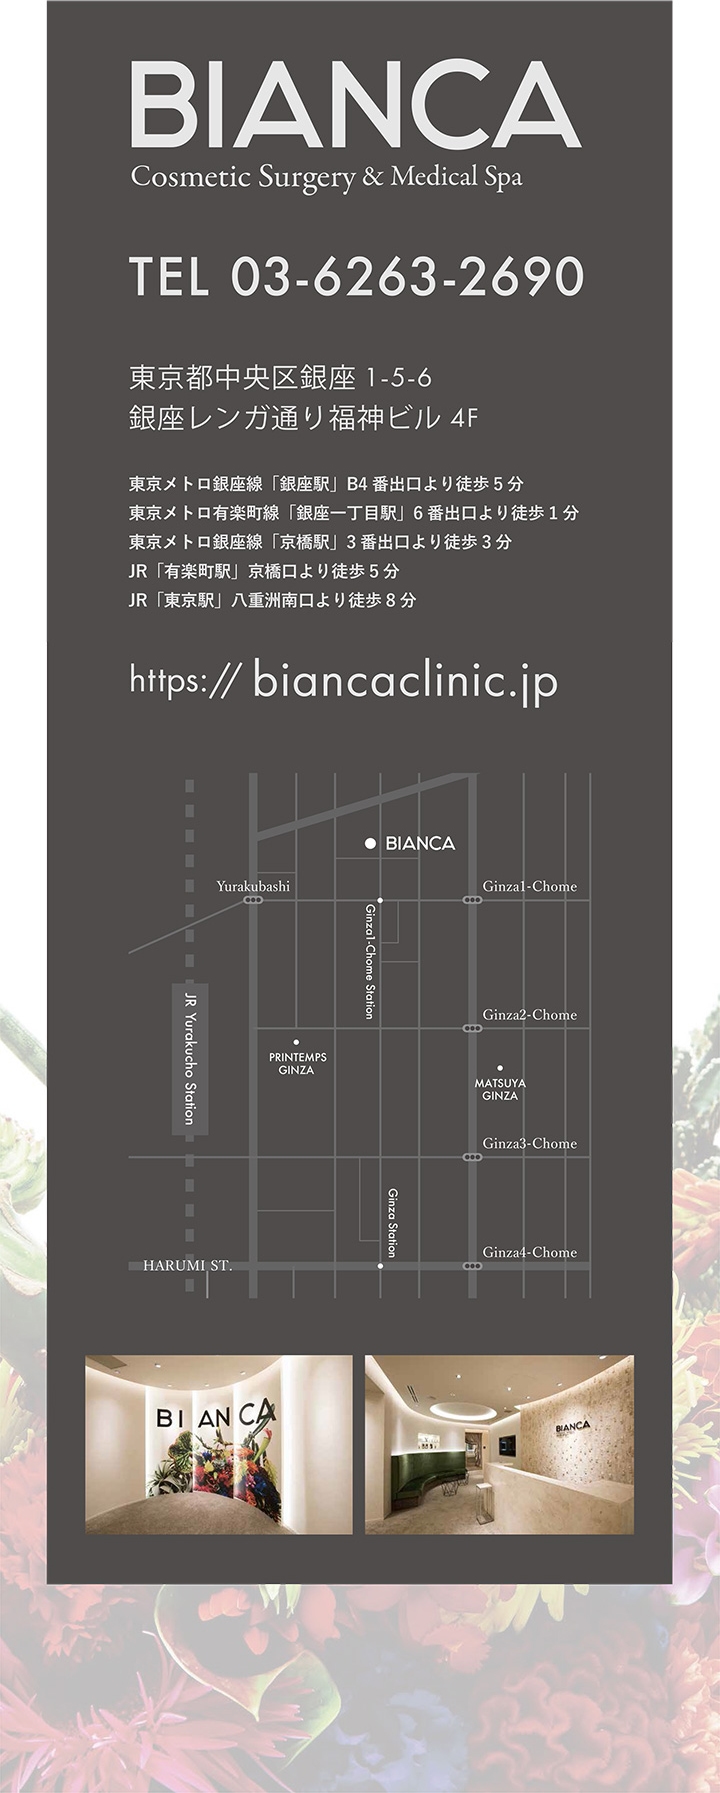 BIANCA Cosmetic Surgery & Medical Spa TEL:03-6263-2690